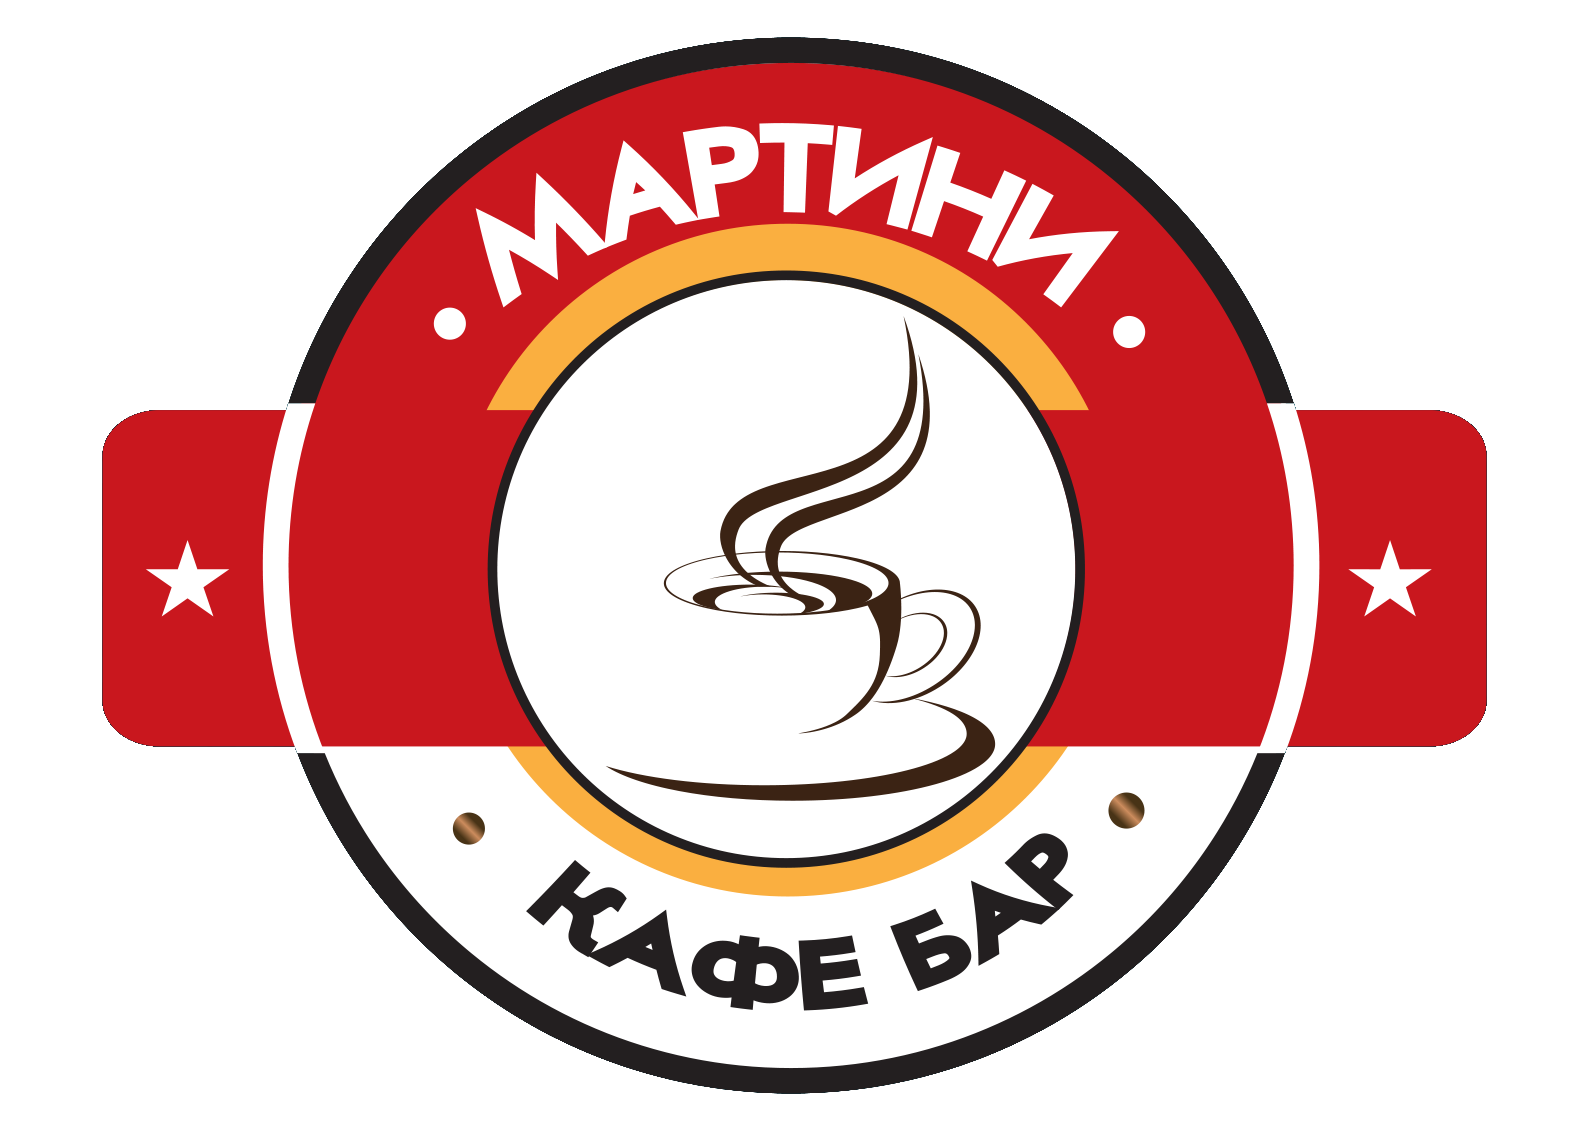 Martini Caffe